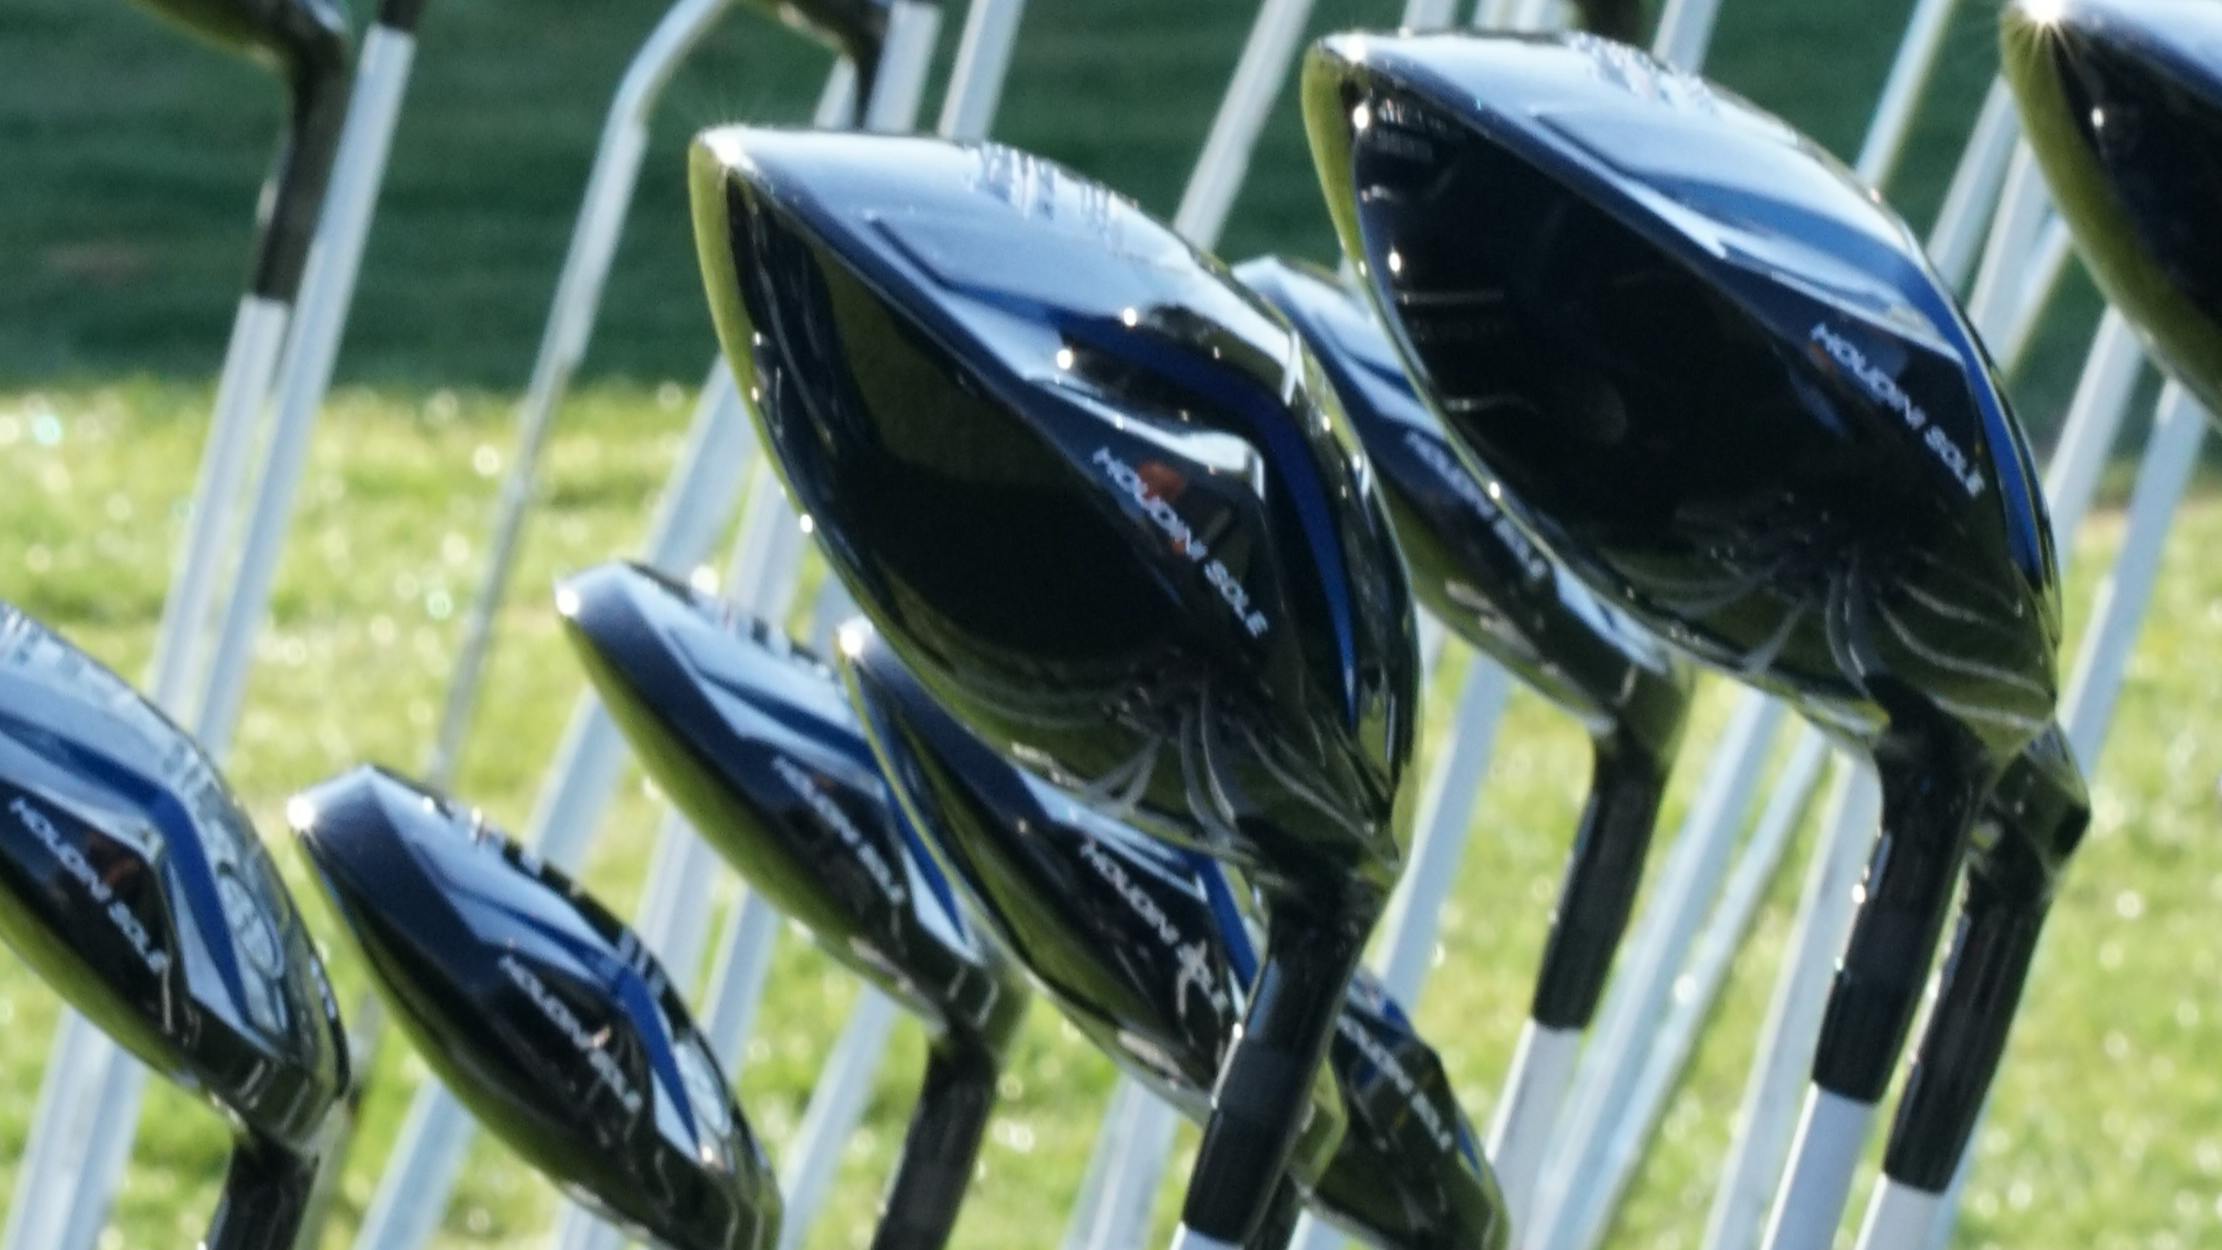 Golf clubs sitting in a rack